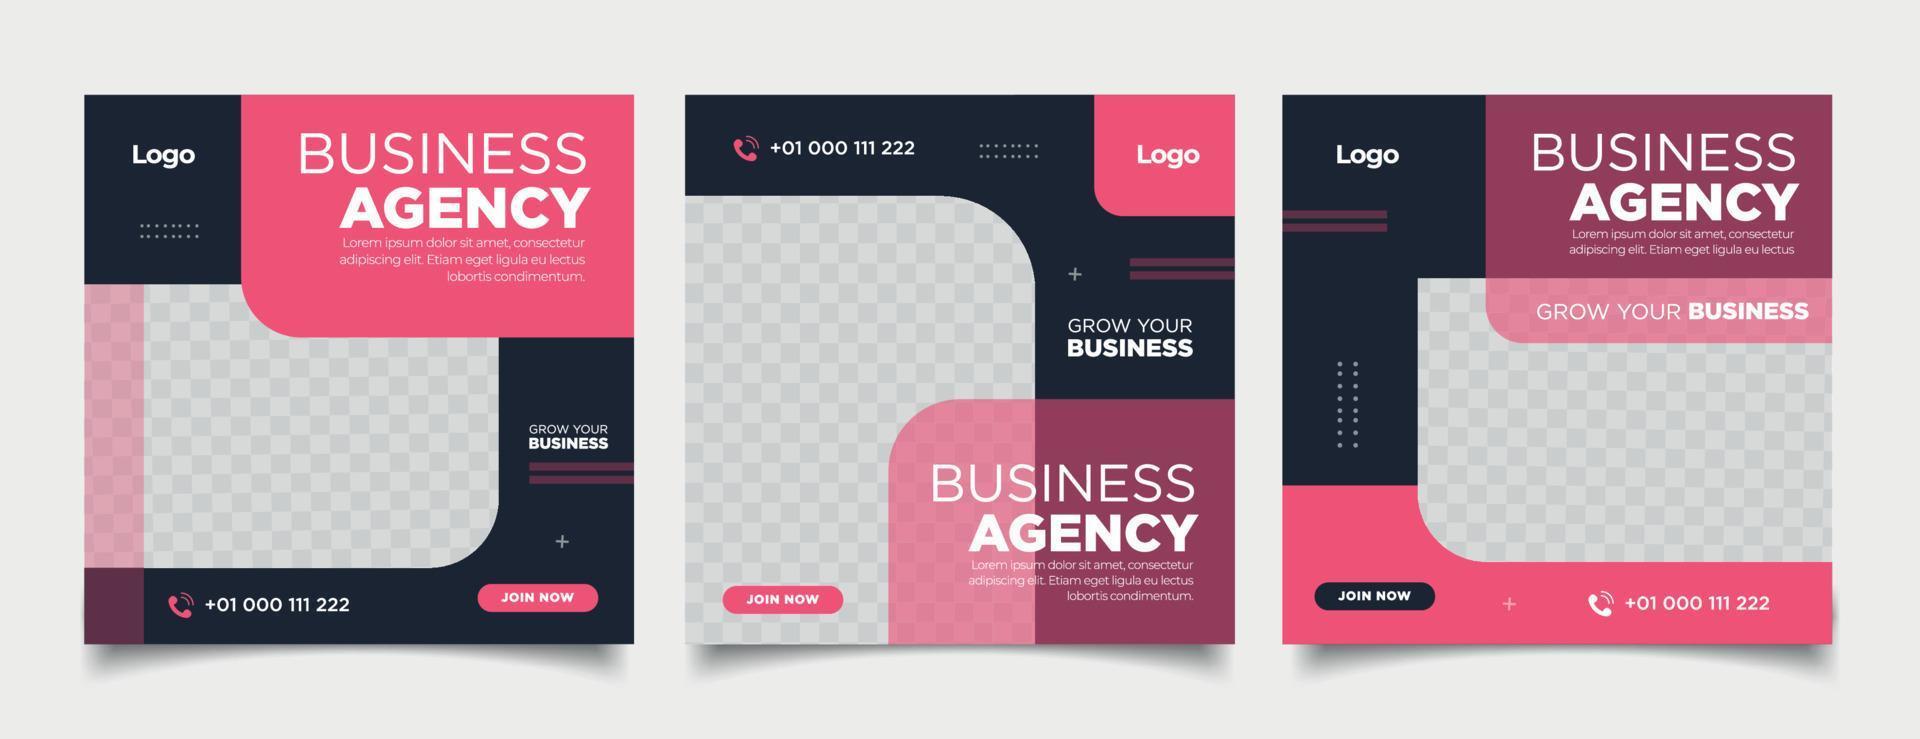 Digital marketing agency with paper texture social media post vector